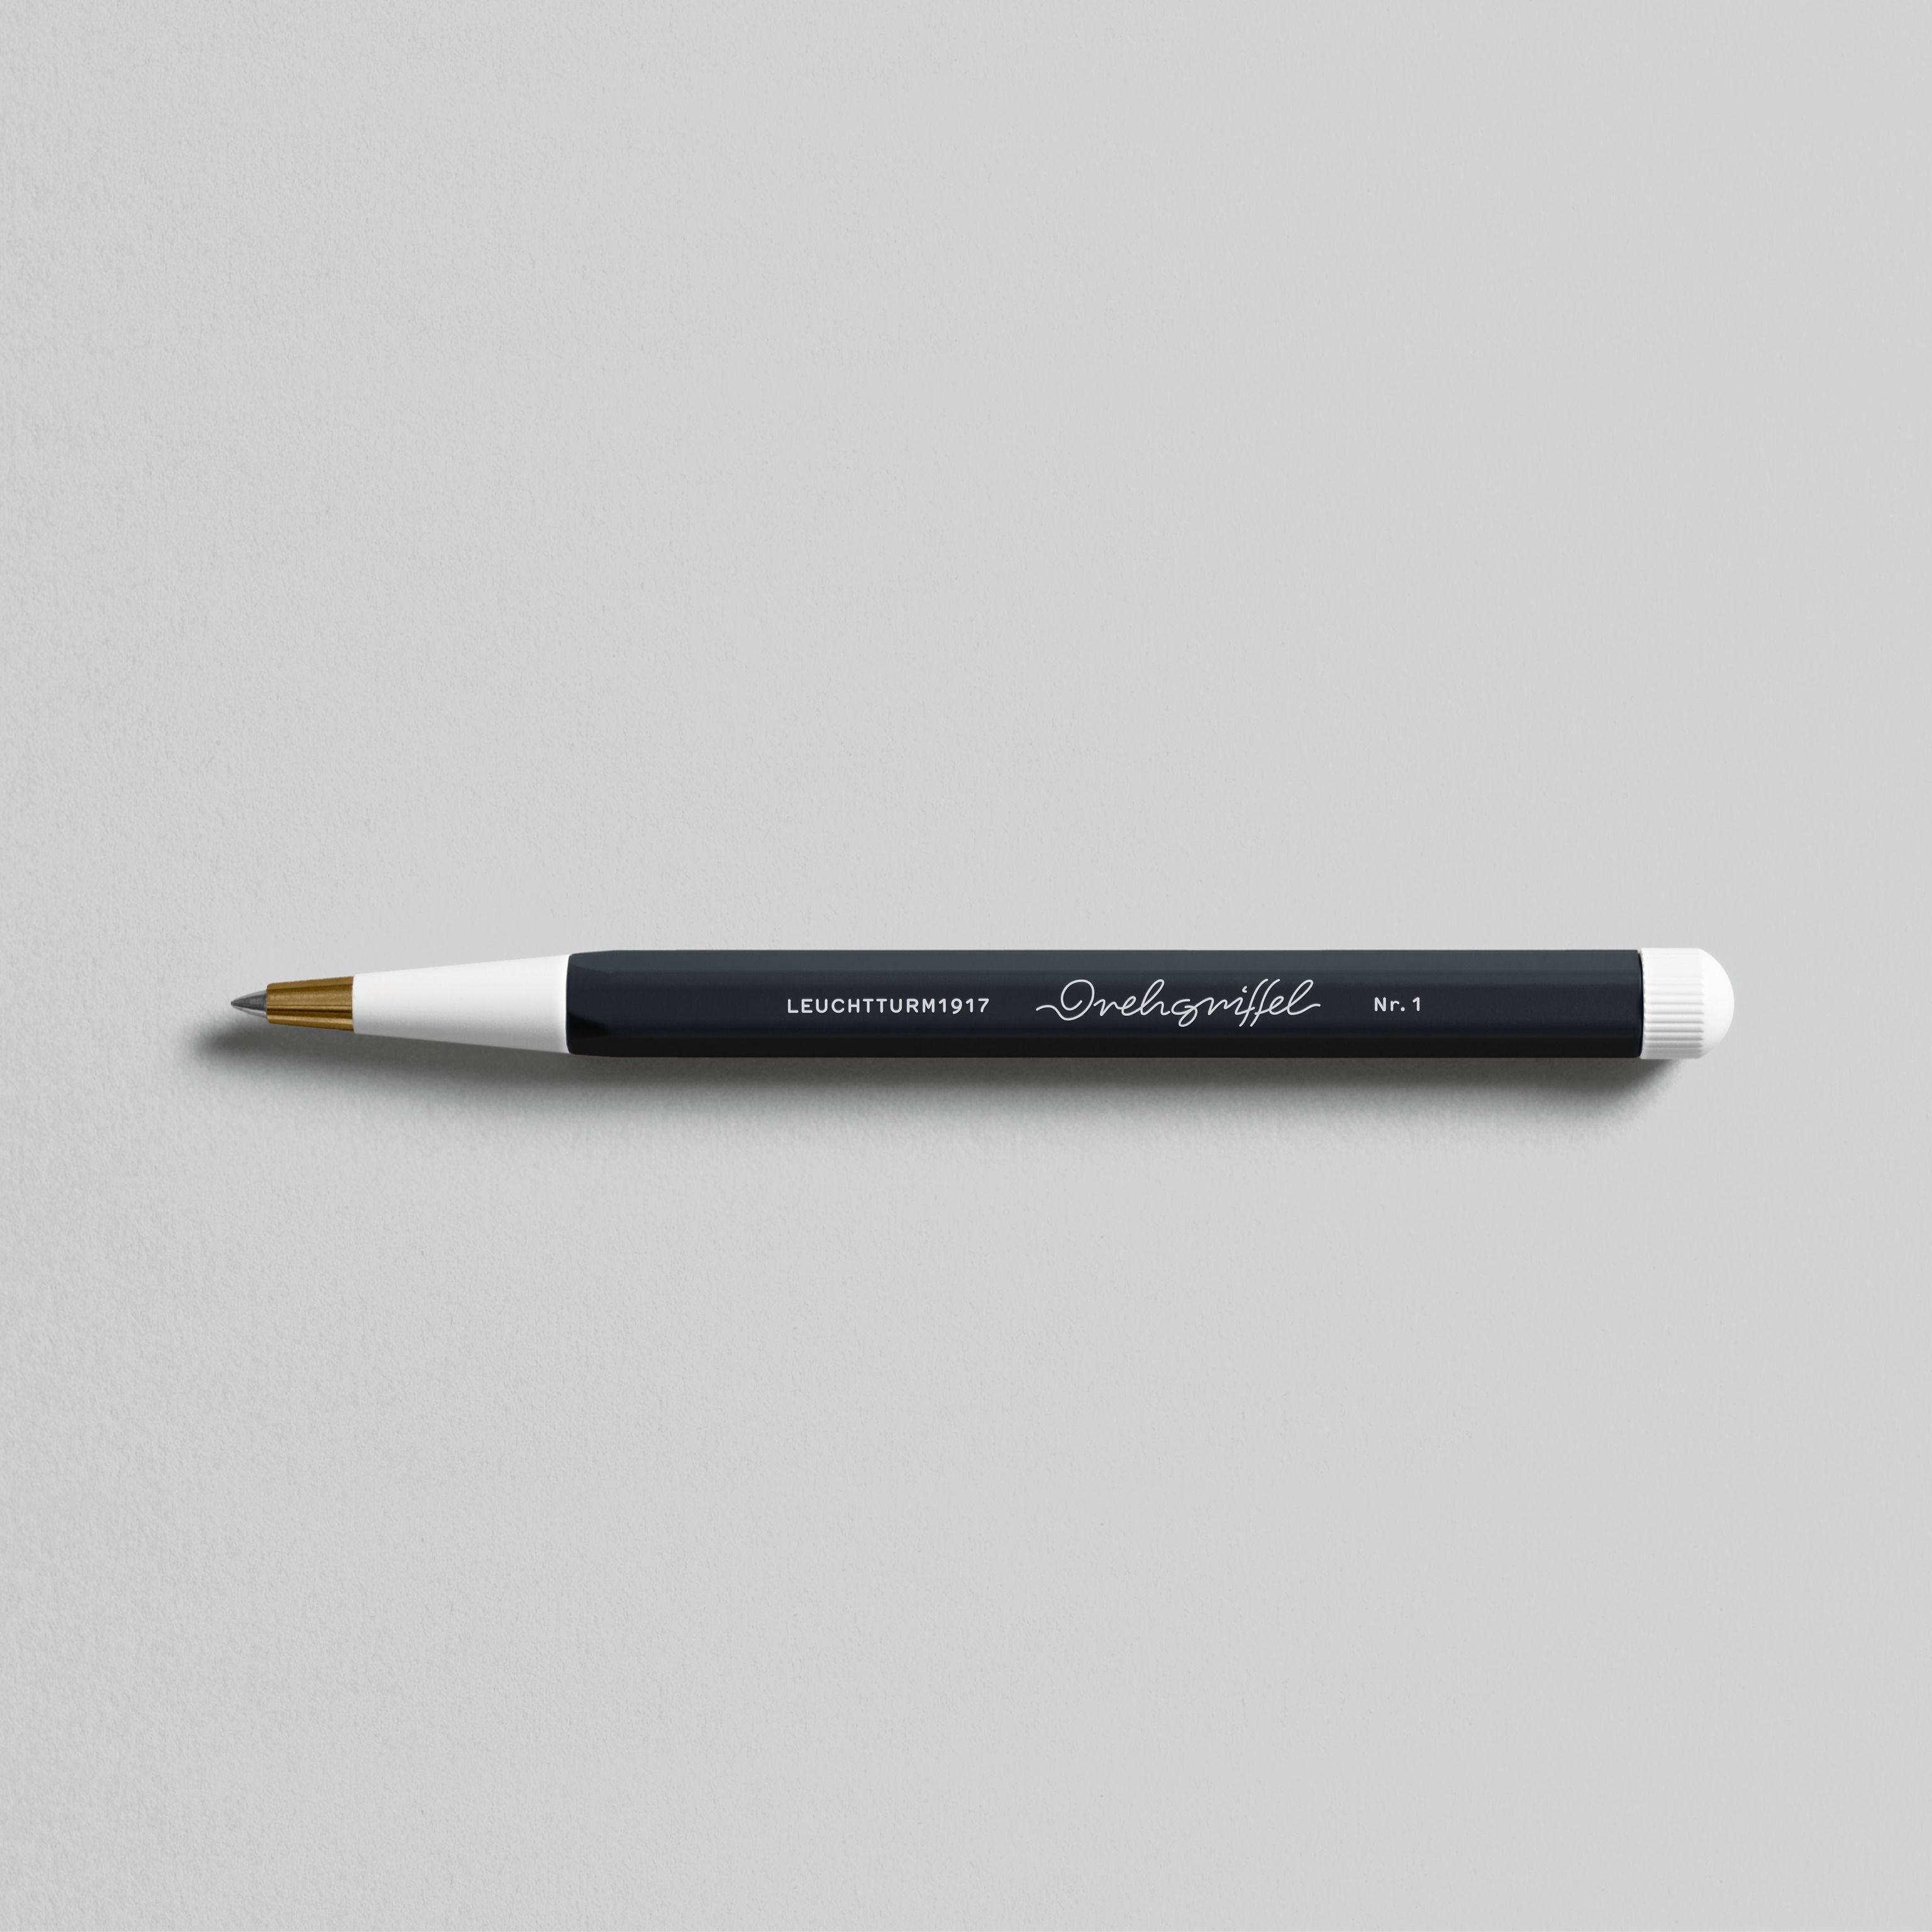 Drehgriffel Gel Pen - Black